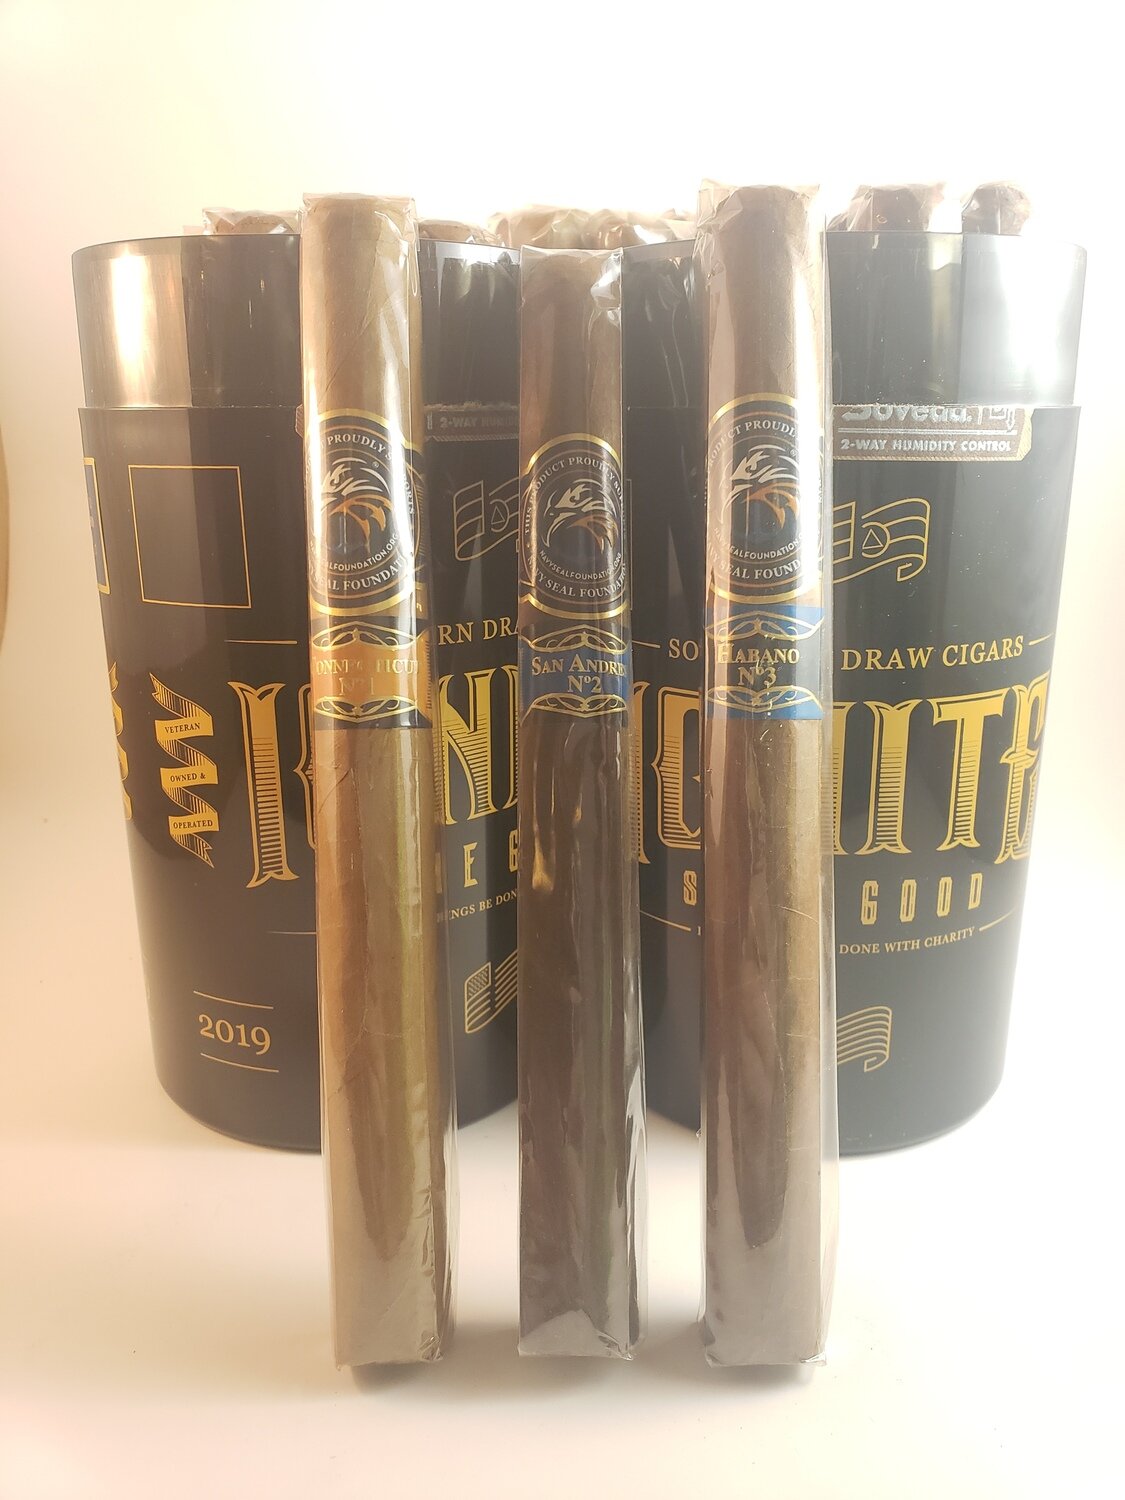 Southern Draw Ignite Jar #1 Connecticut Double Corona 7 1/2 x 50 Single Cigar